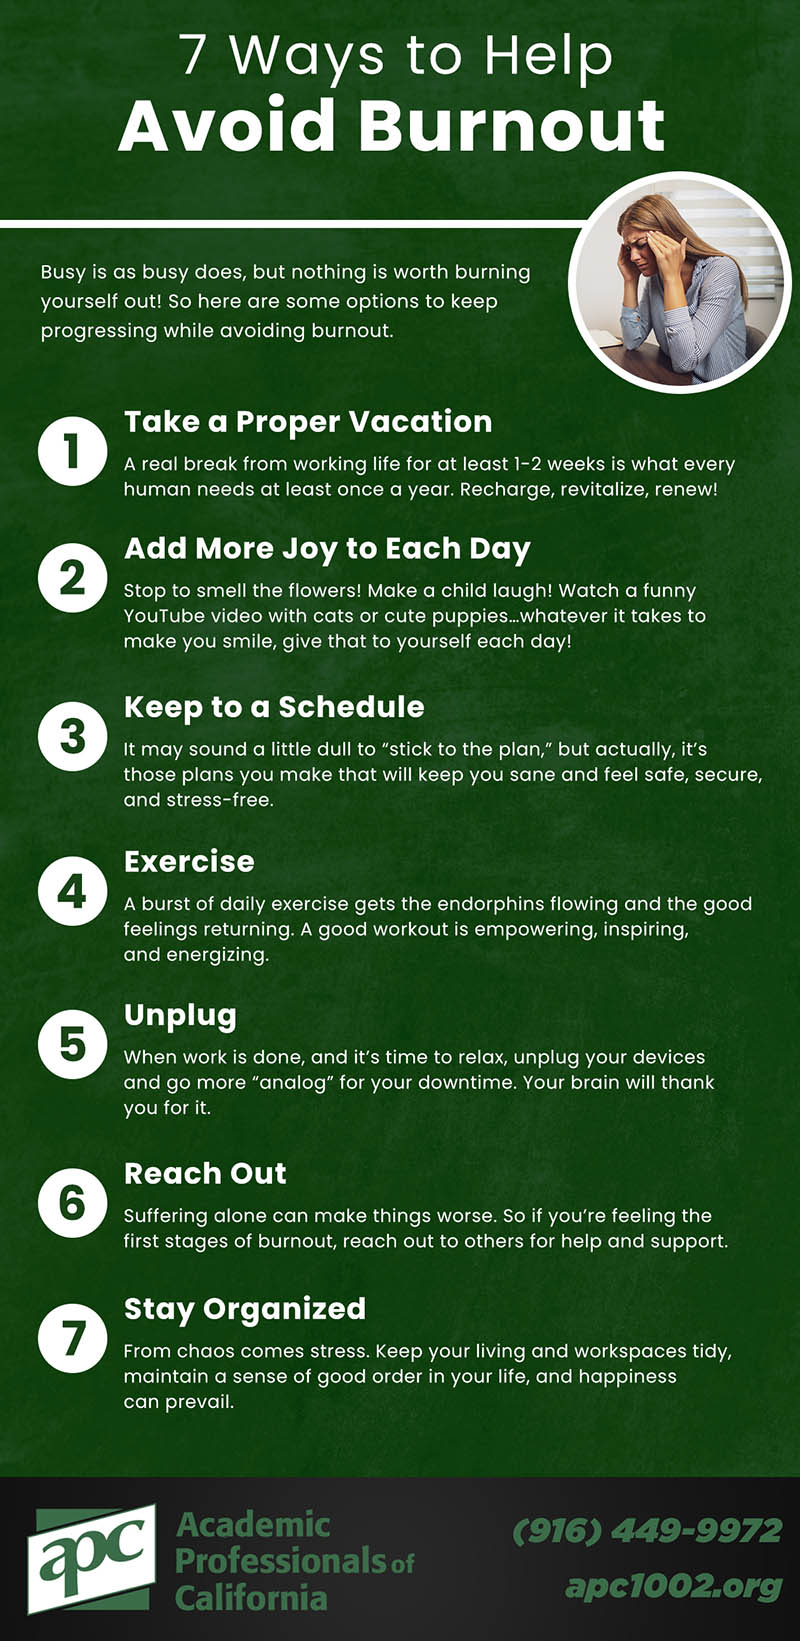 7 Ways to Help Avoid Burnout